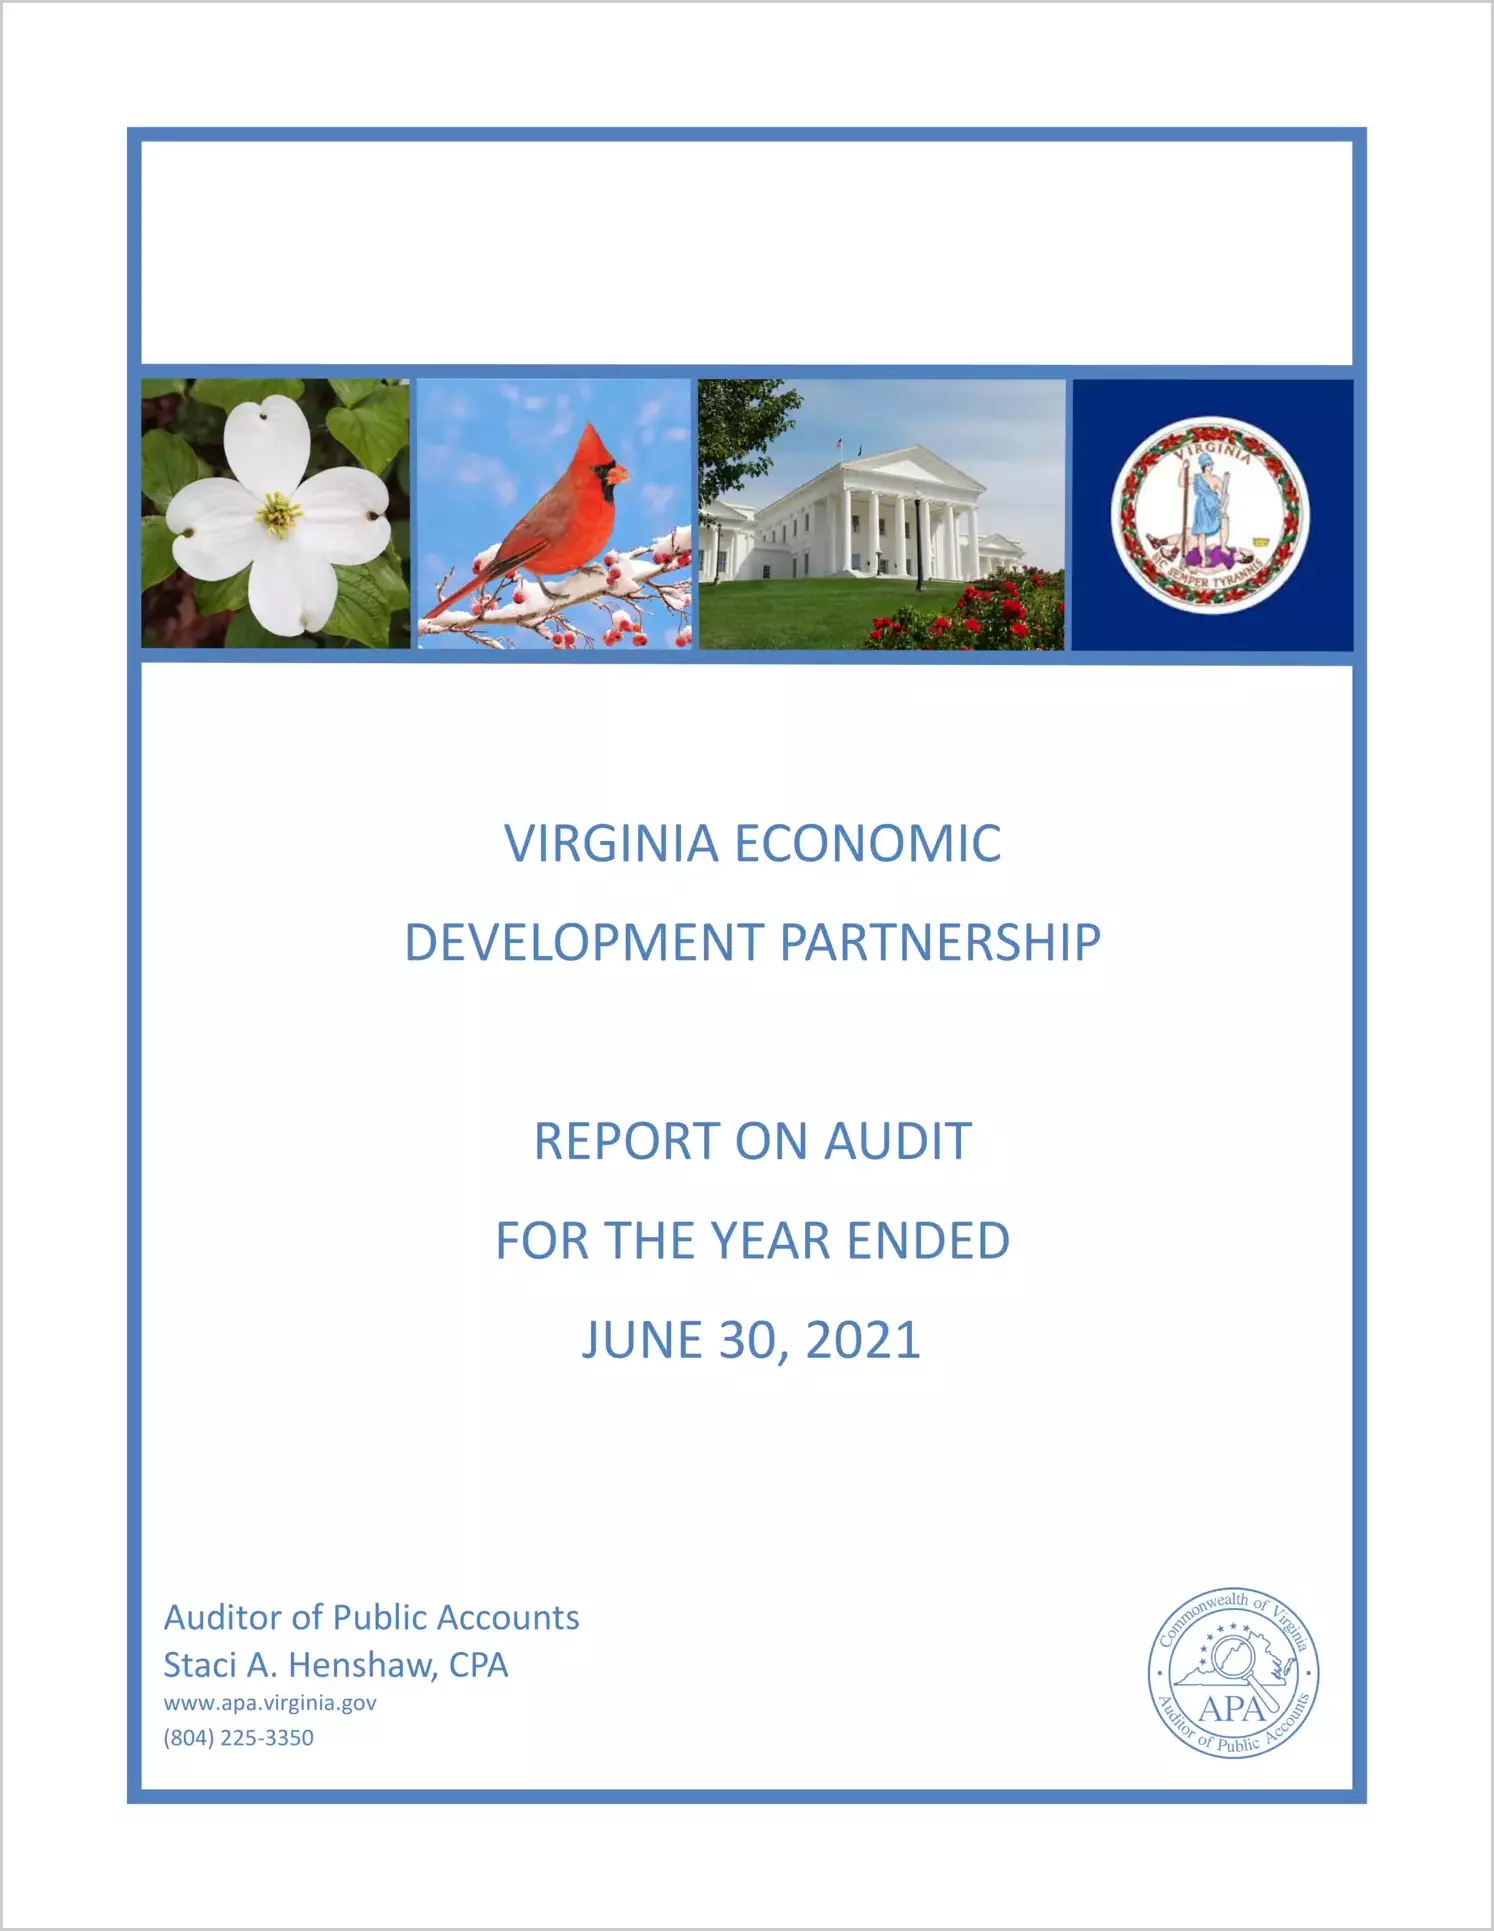 Virginia Economic Development Partnership for the year ended June 30, 2021